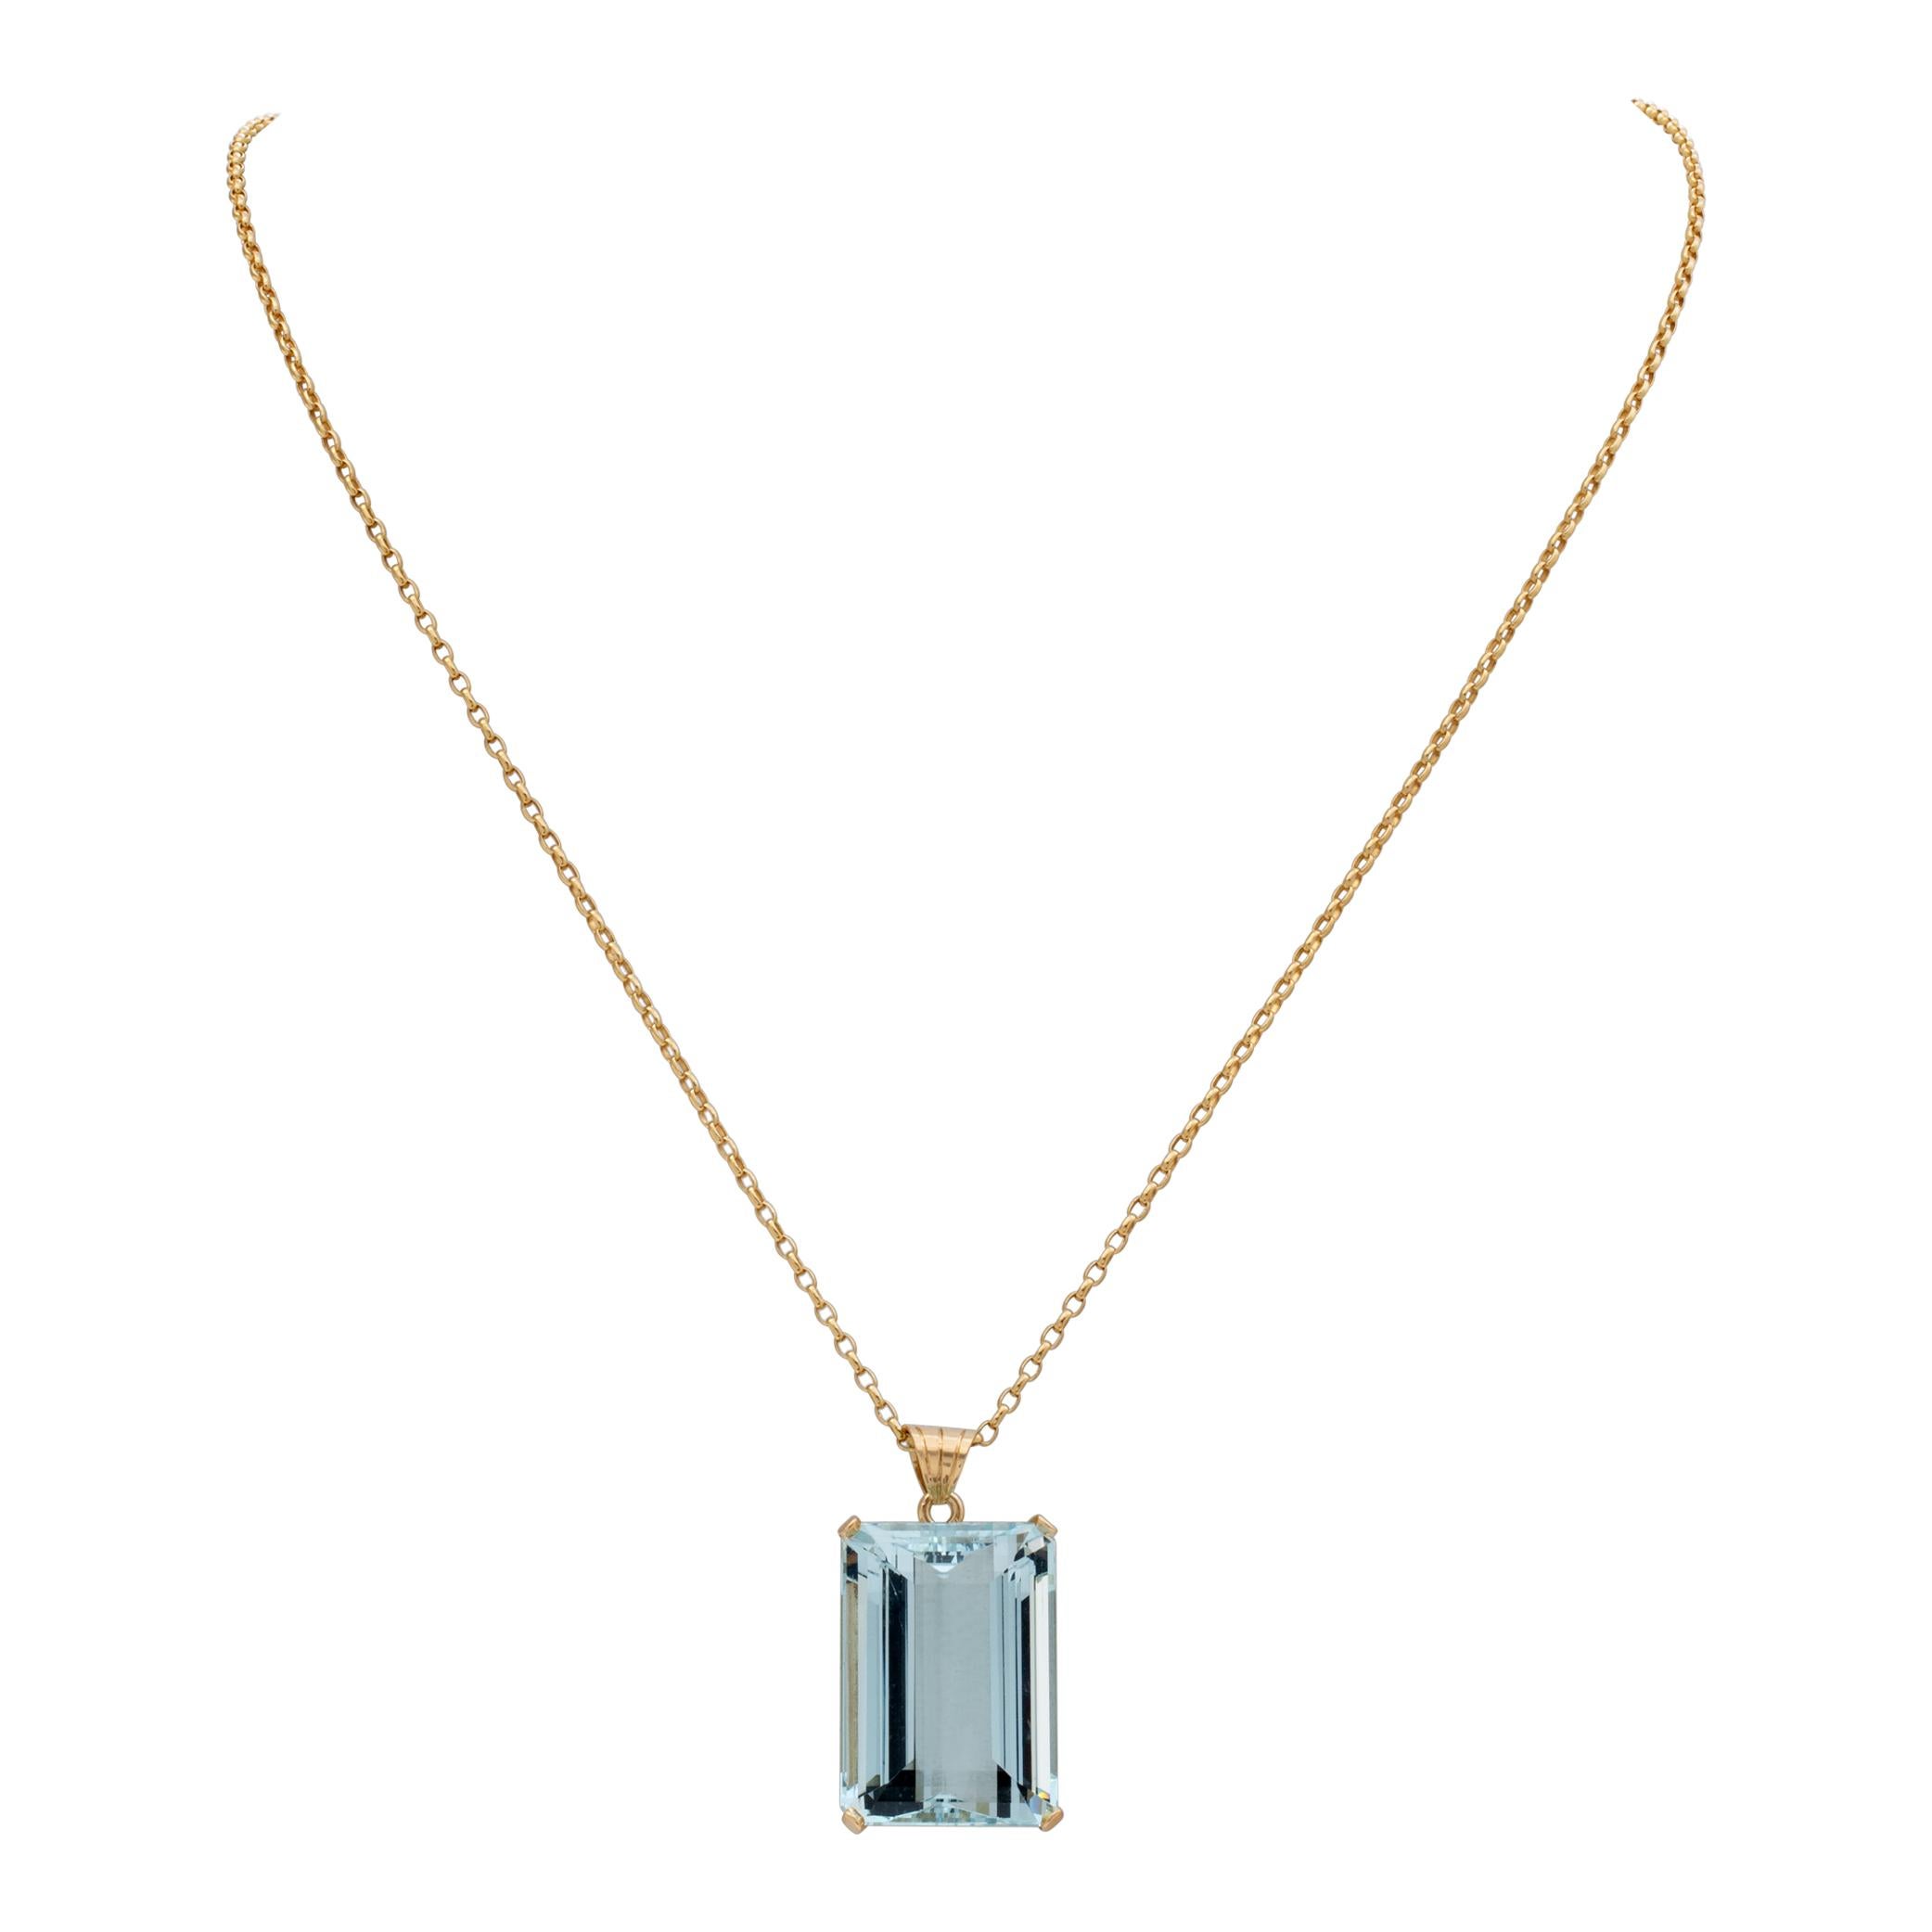 AGL Certified brilliant Emerald cut Aquamarine (over 28.35 carats) pendant with 18